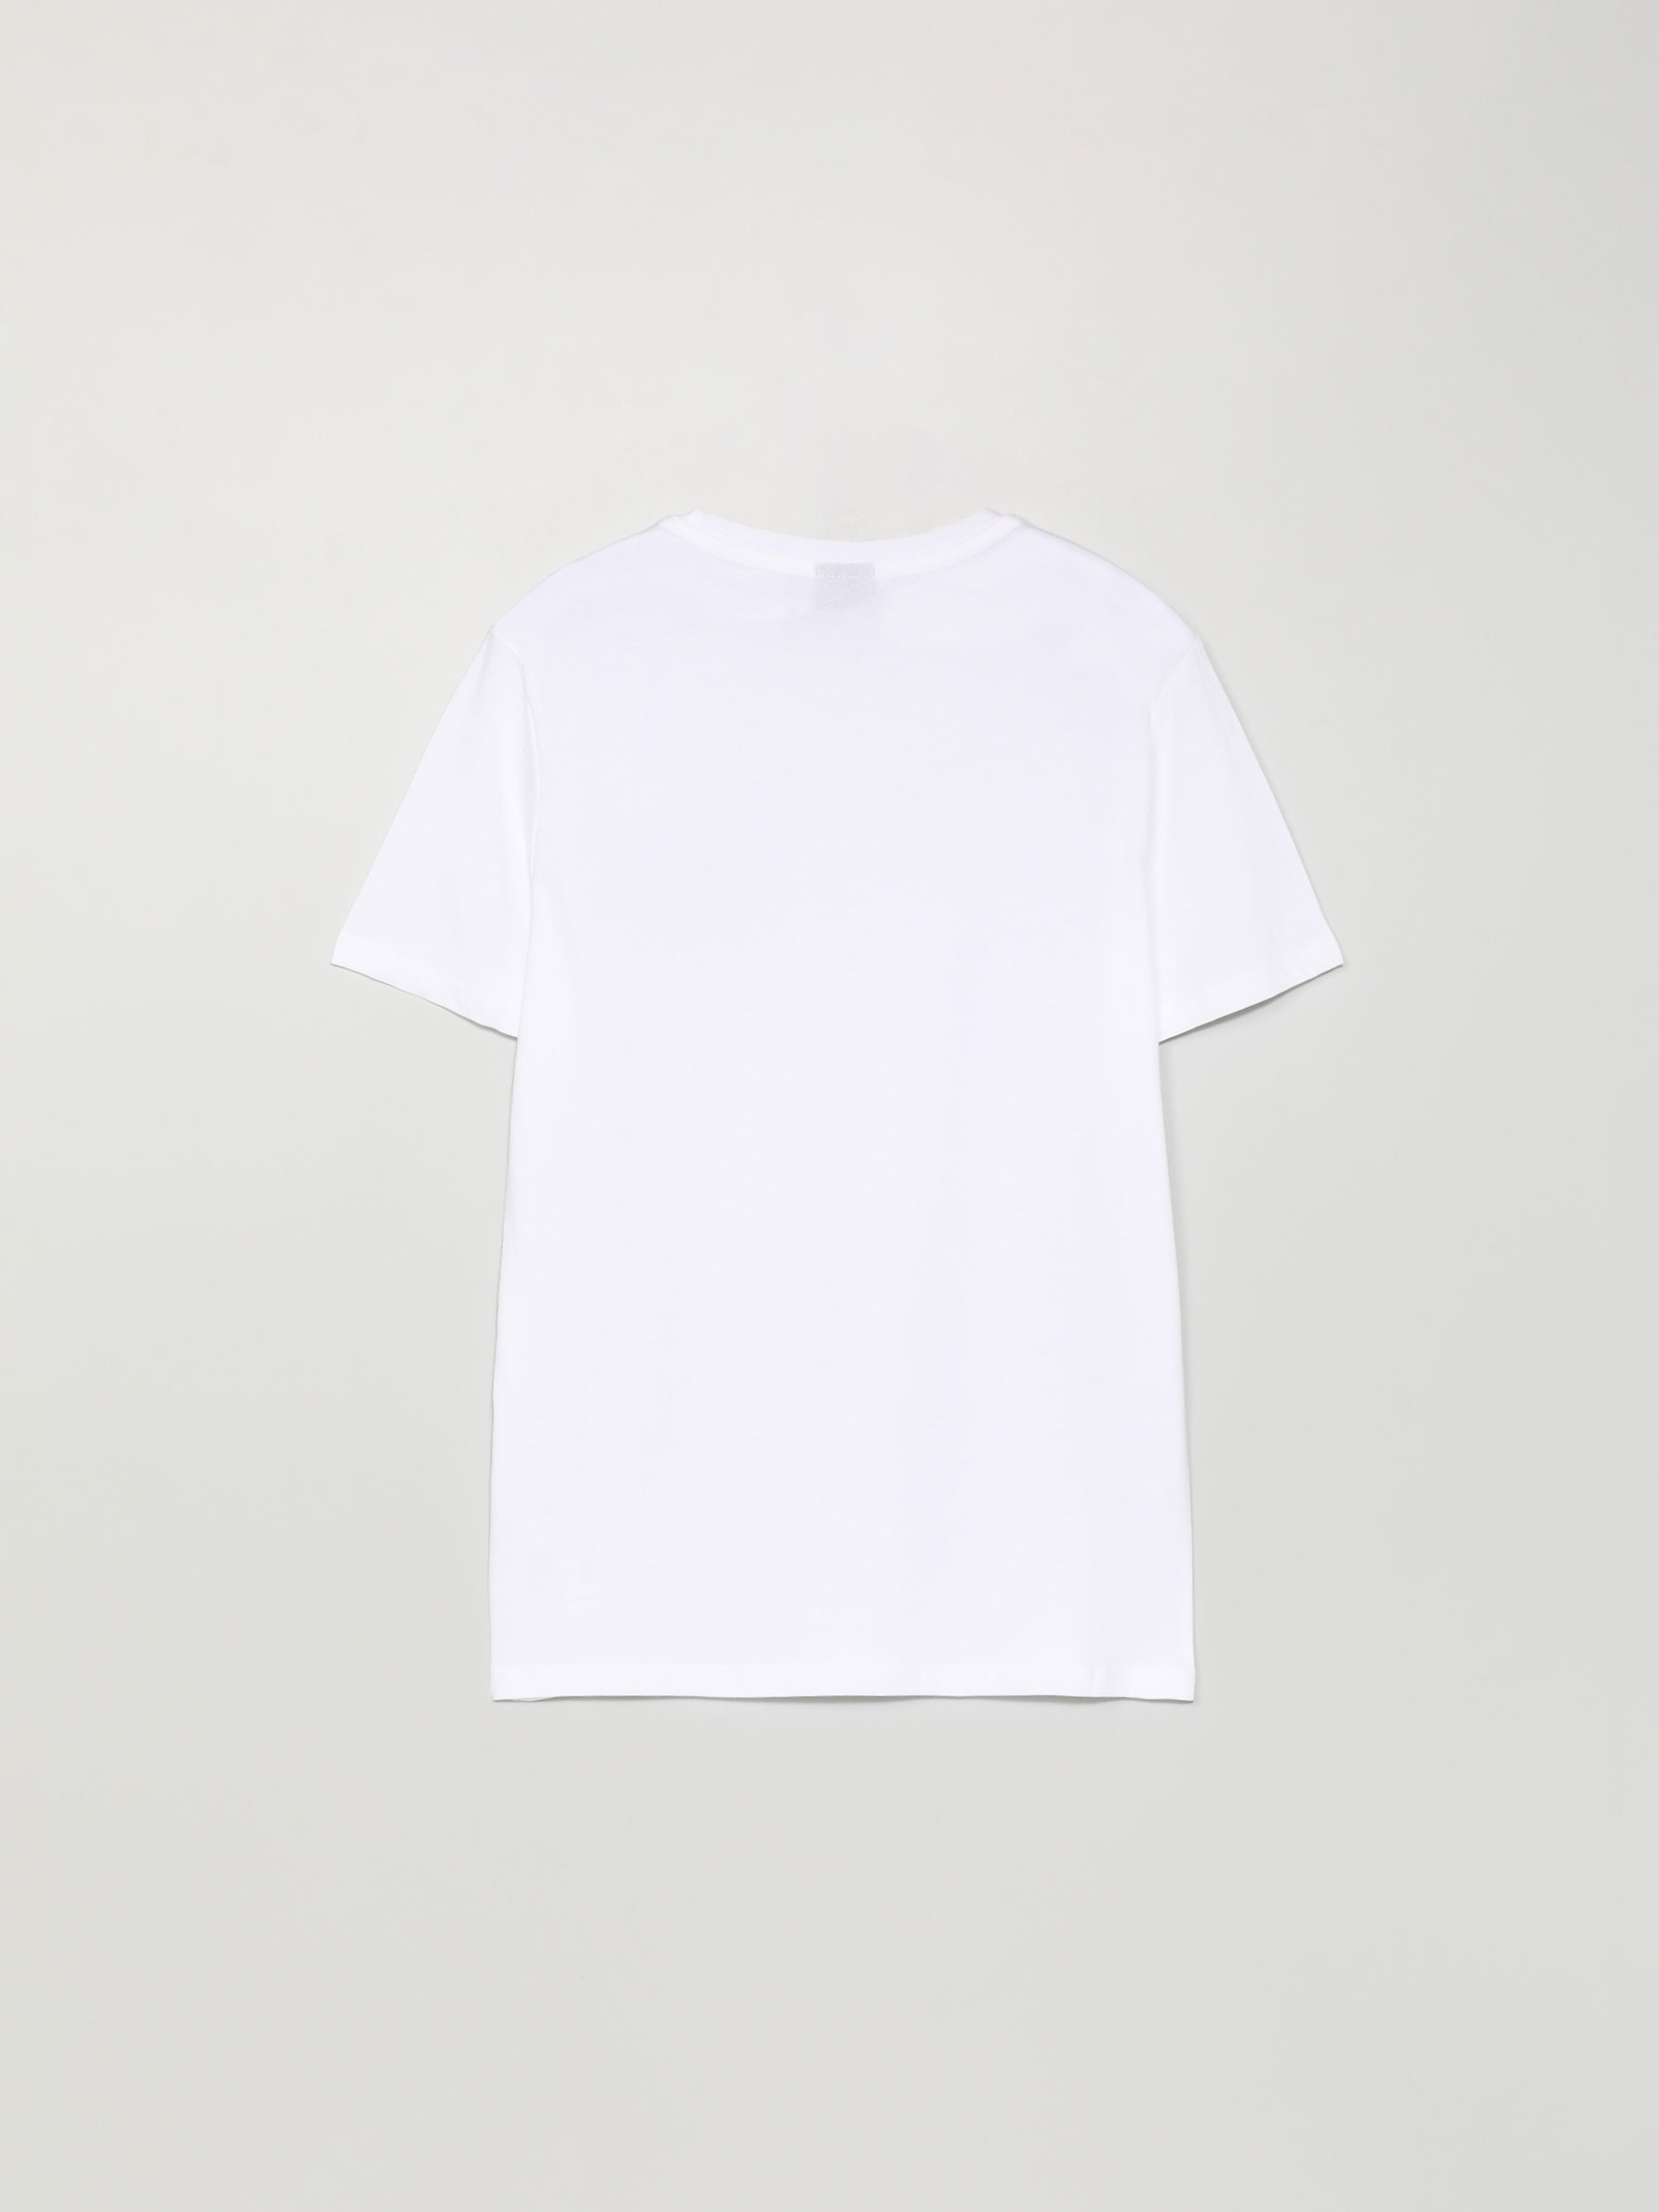 2 pack Unisex Plain White Cotton T Shirt 